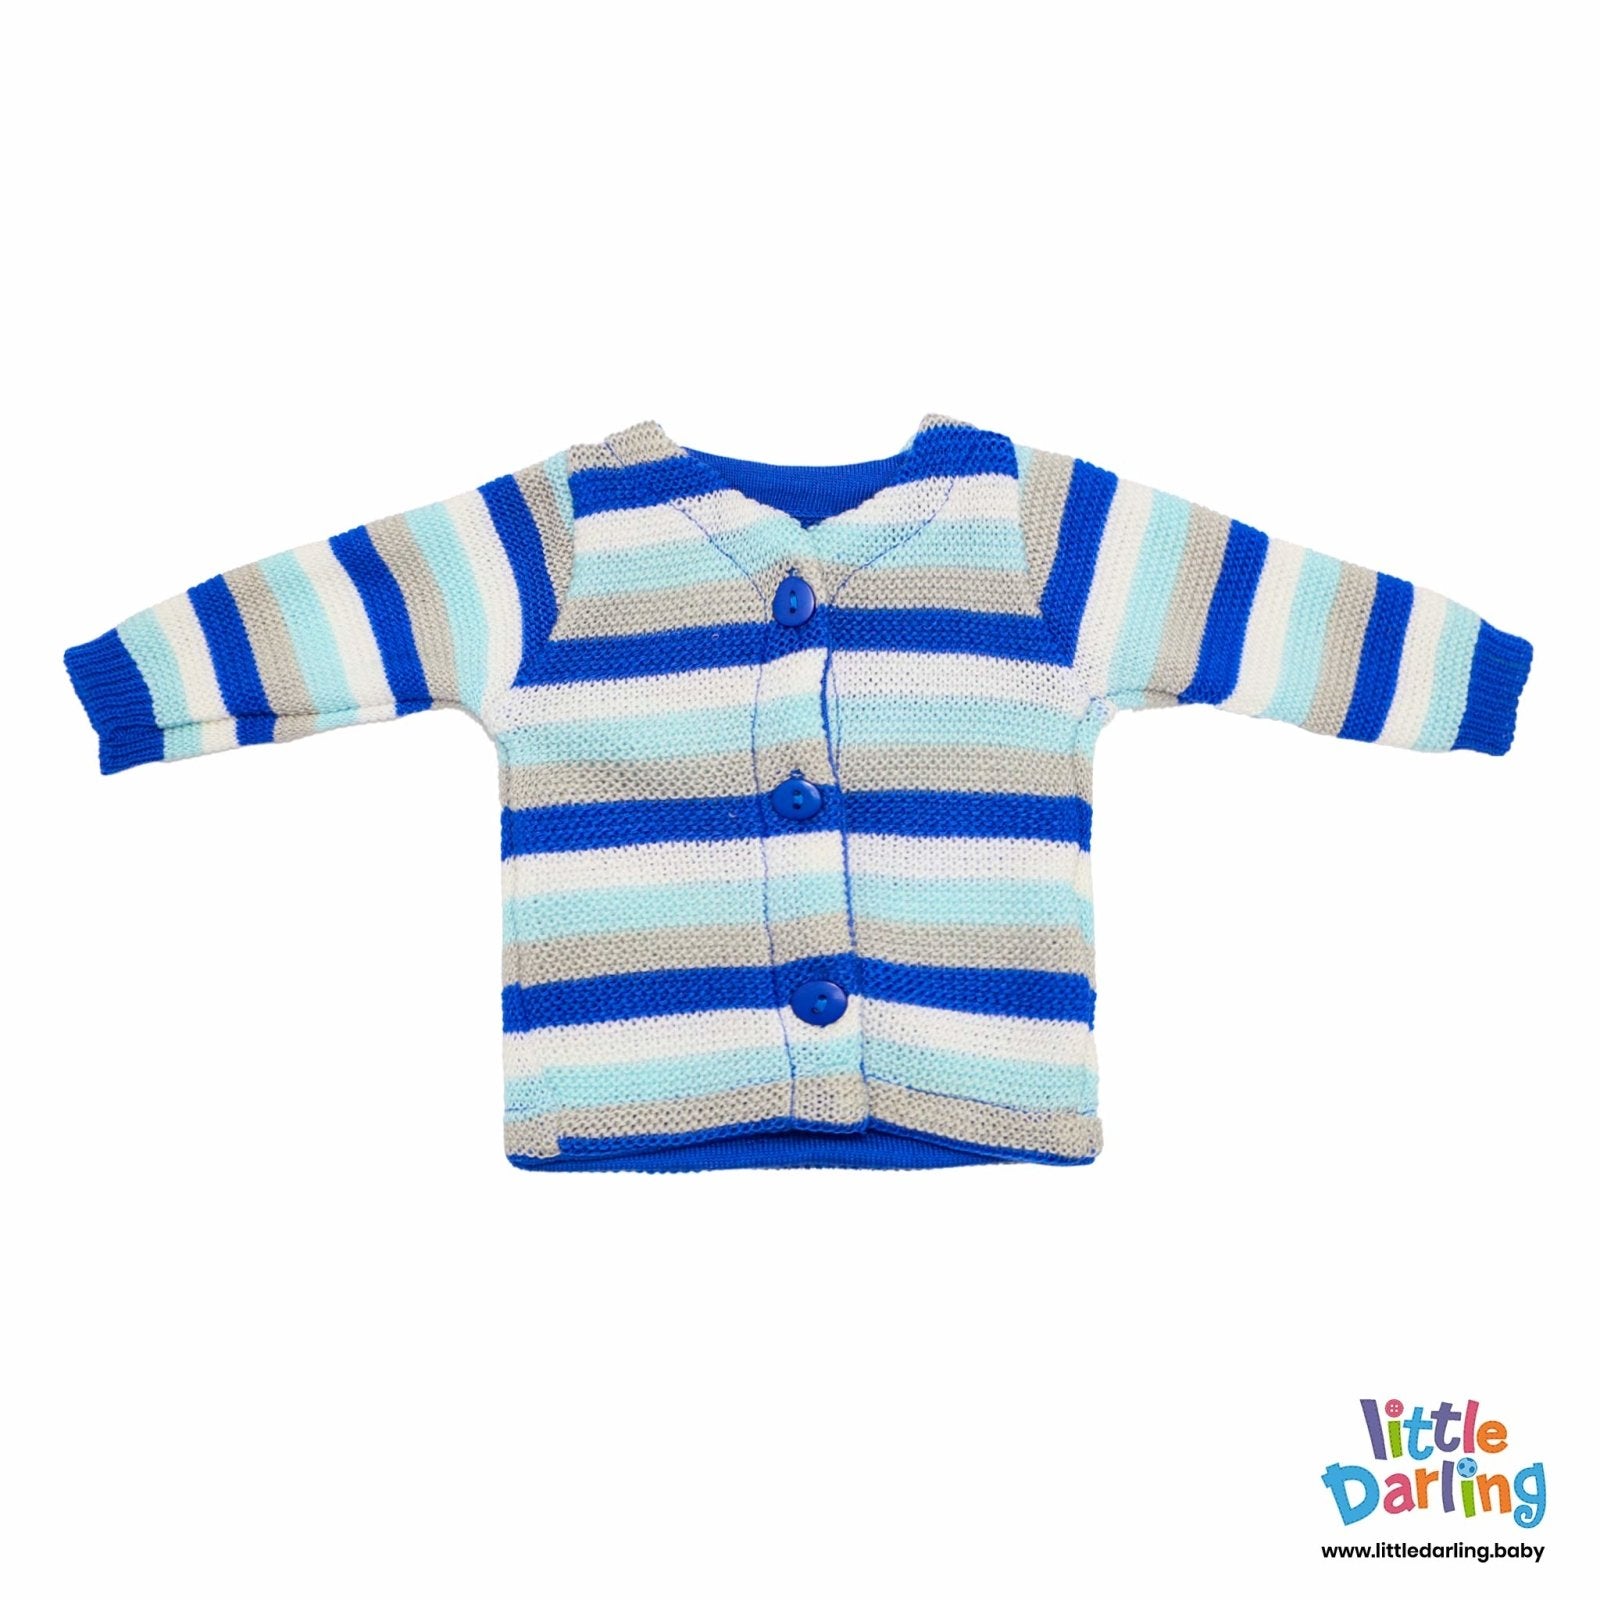 4 Pcs Woolen Gift Set Blue Stripes by Little Darling